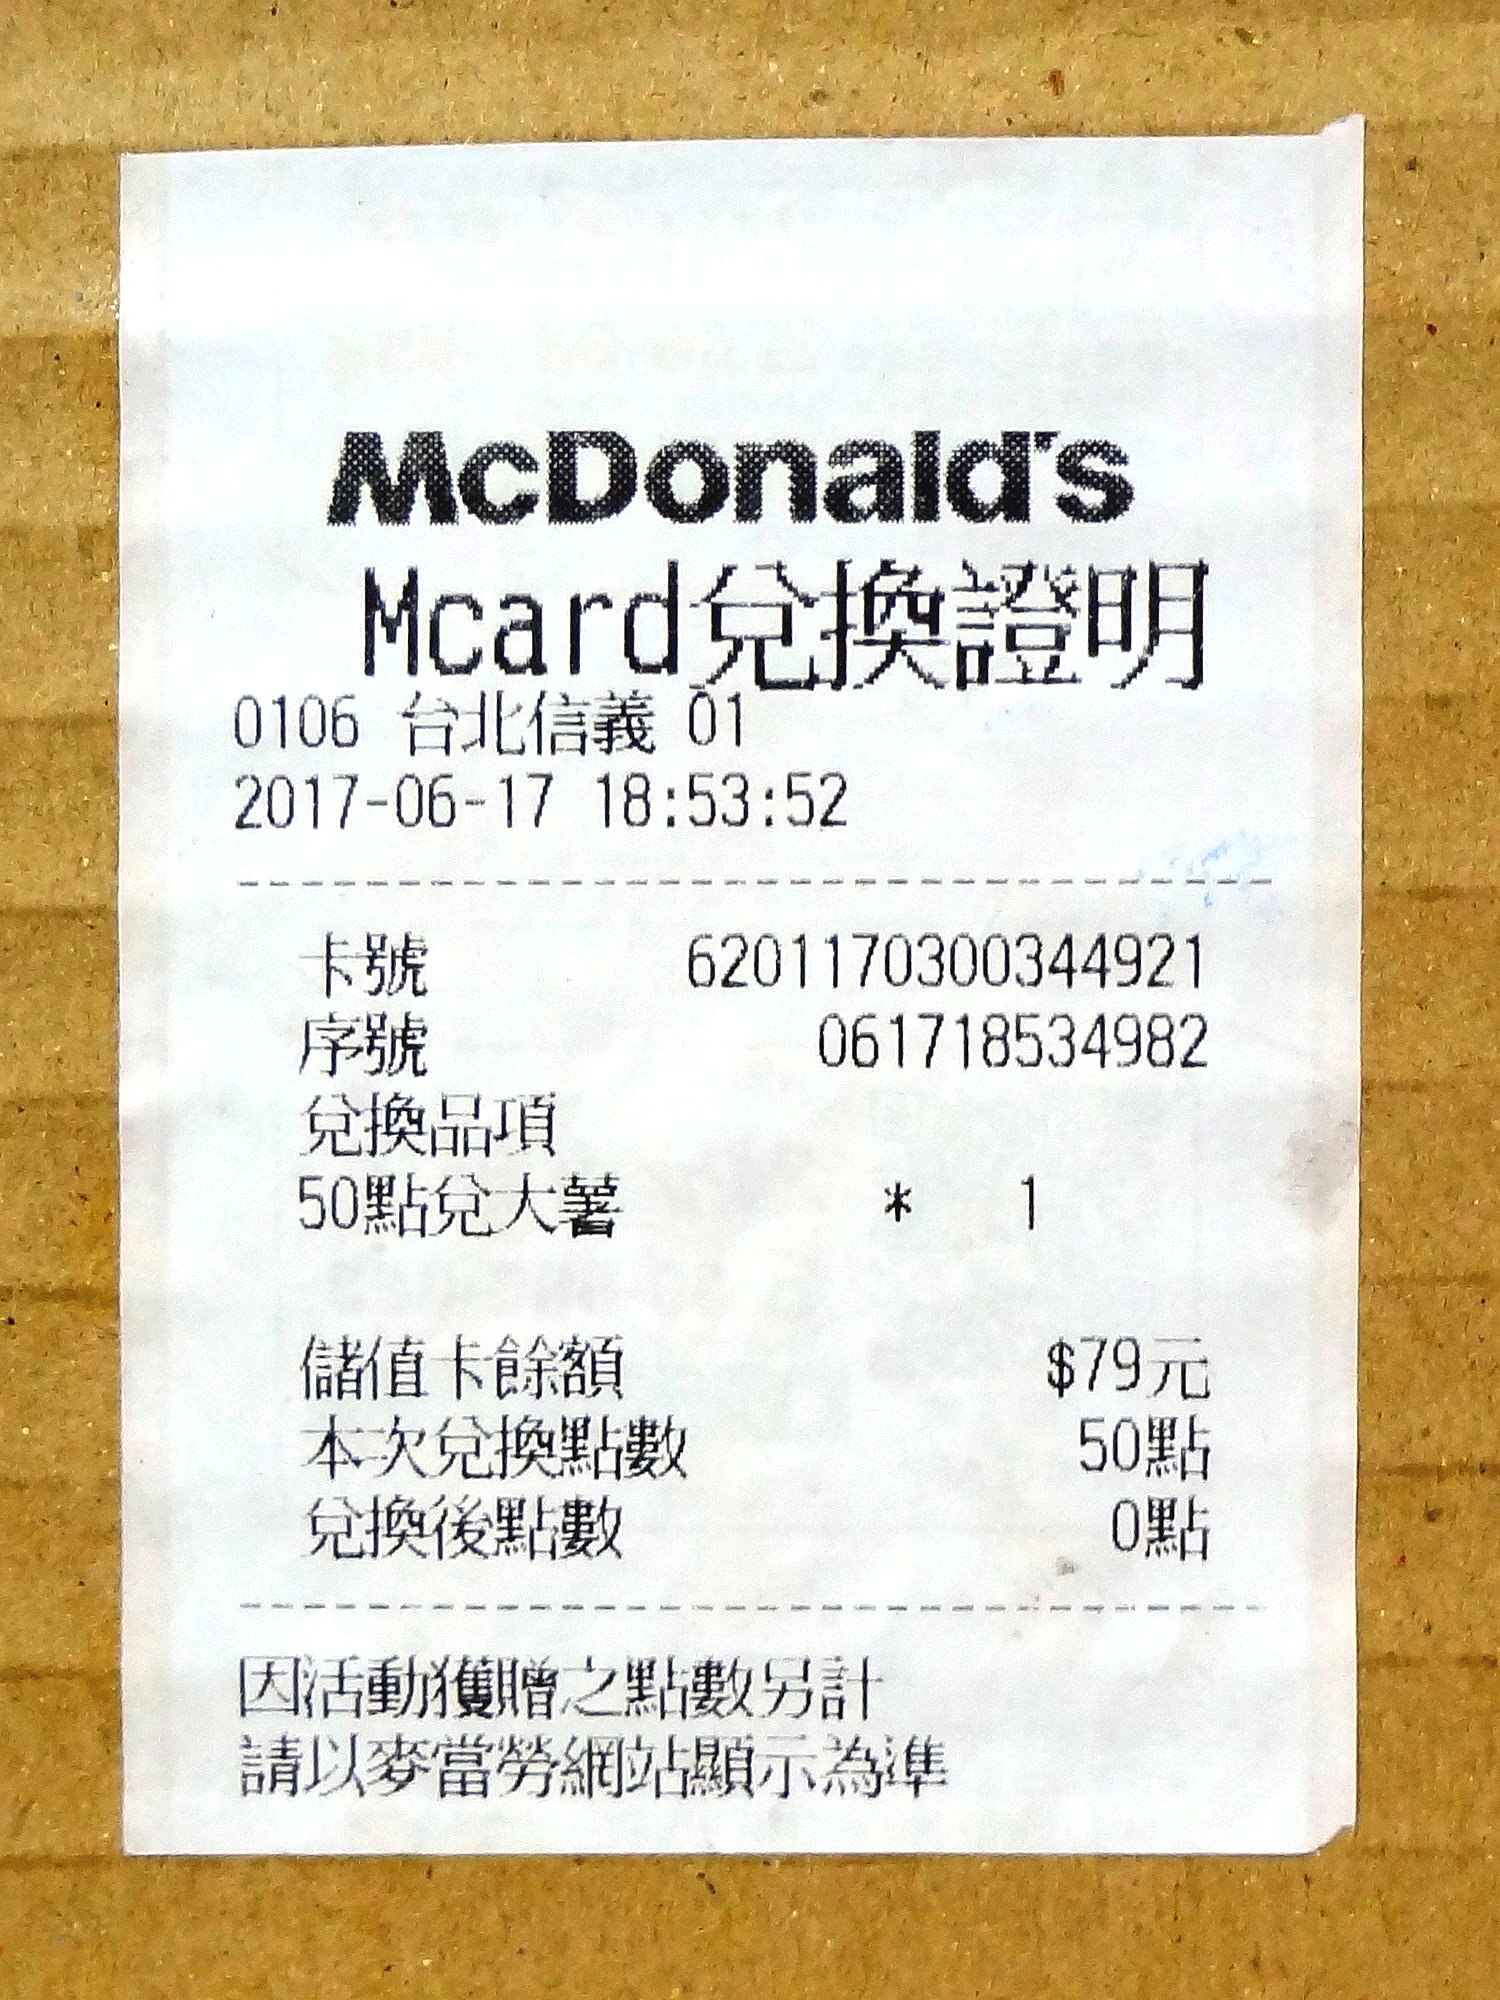 File:McDonald's Taipei Xinyi Restaurant Mcard exchange receipt